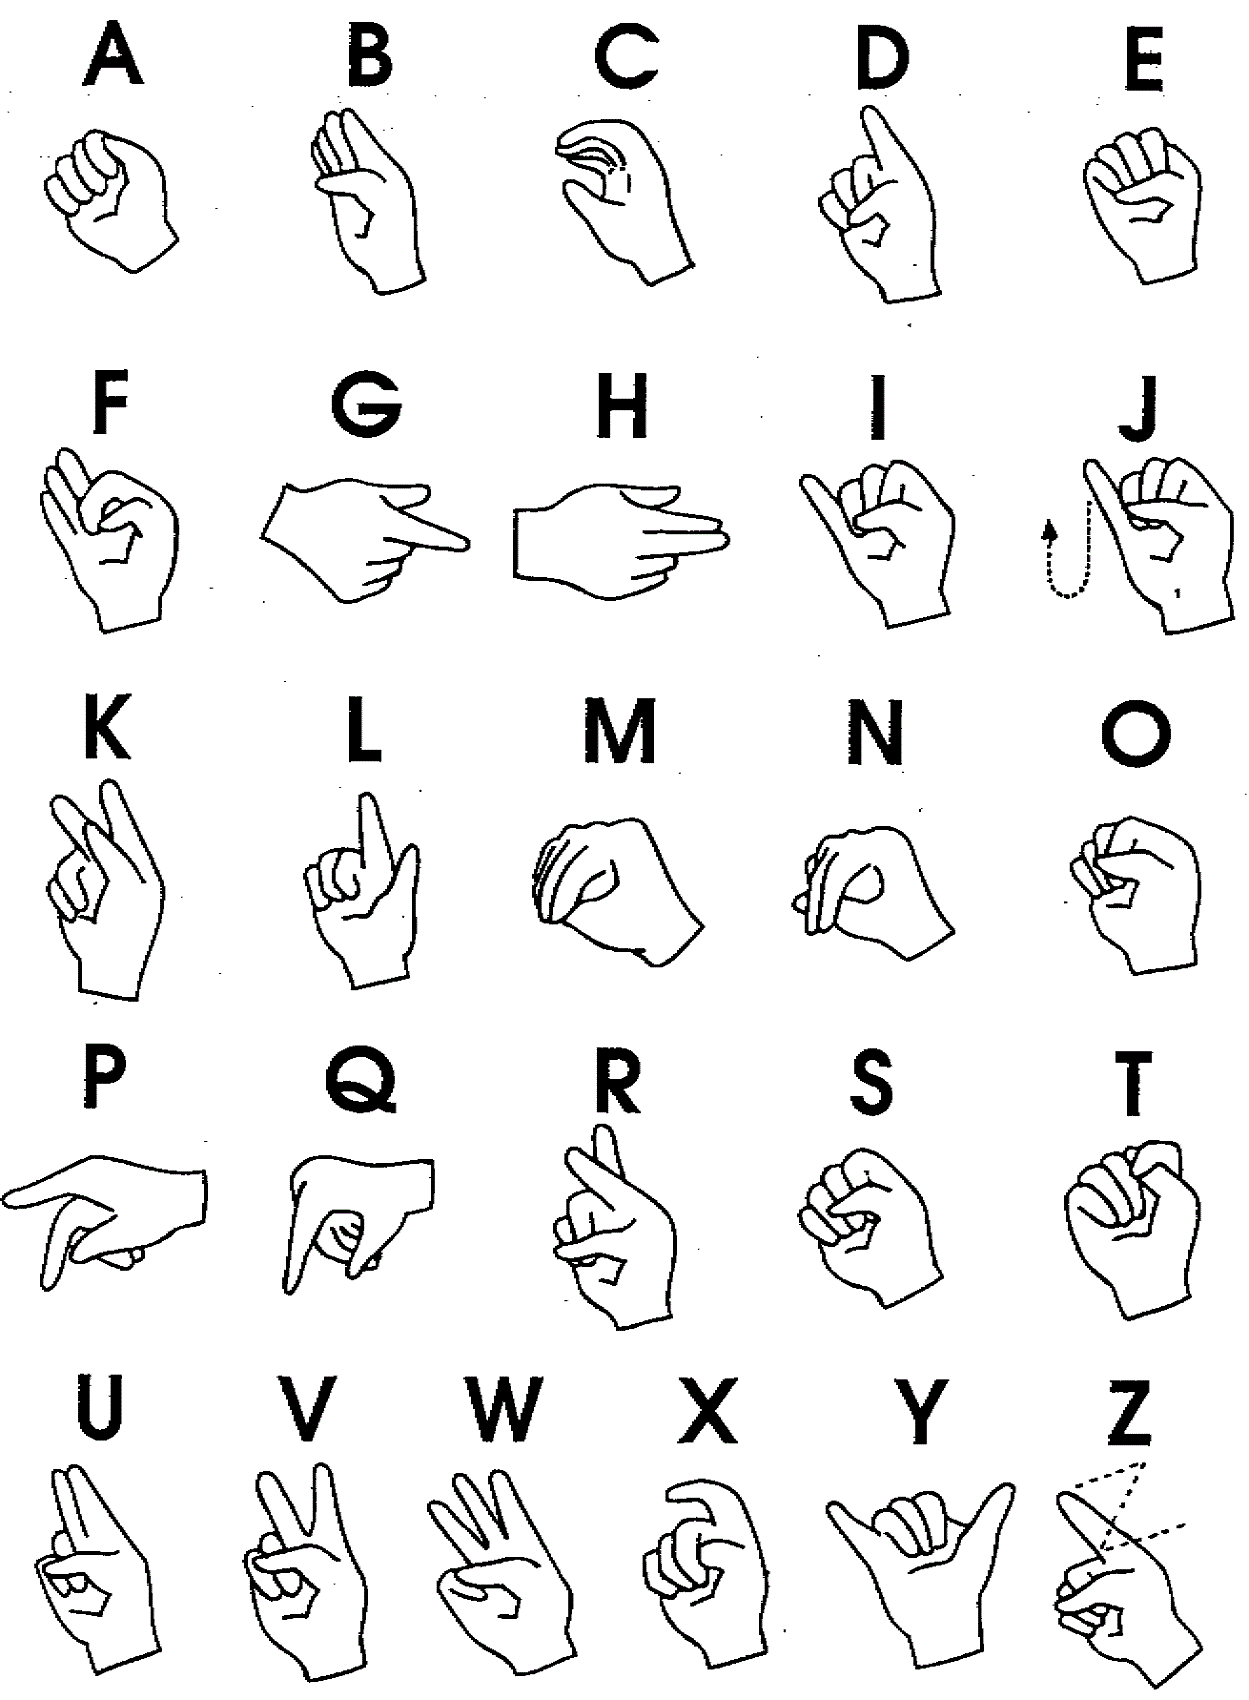 printable-sign-language-charts-activity-shelter